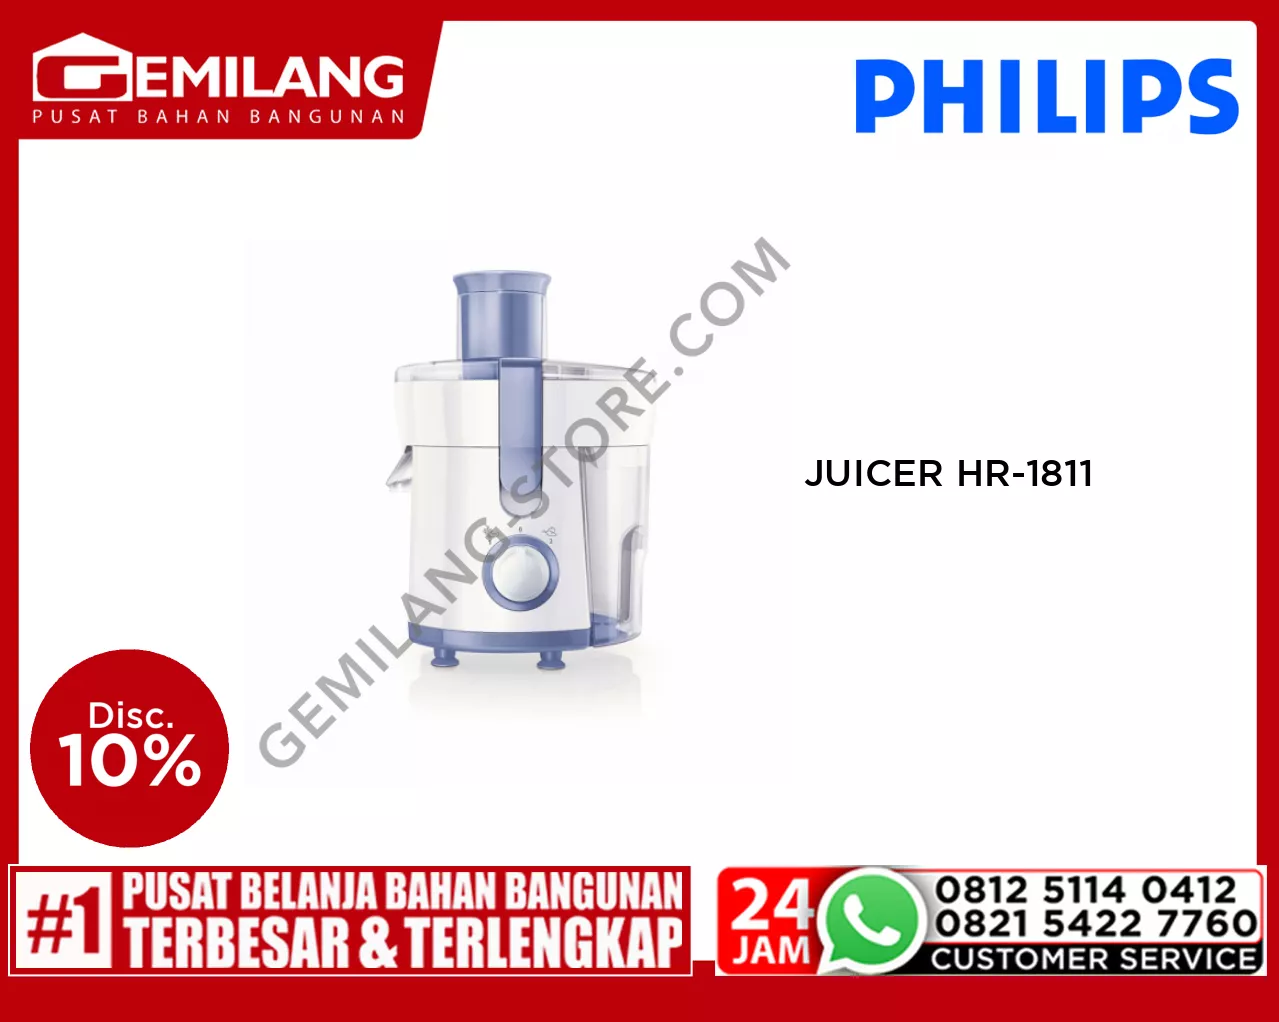 PHILIPS JUICER HR-1811